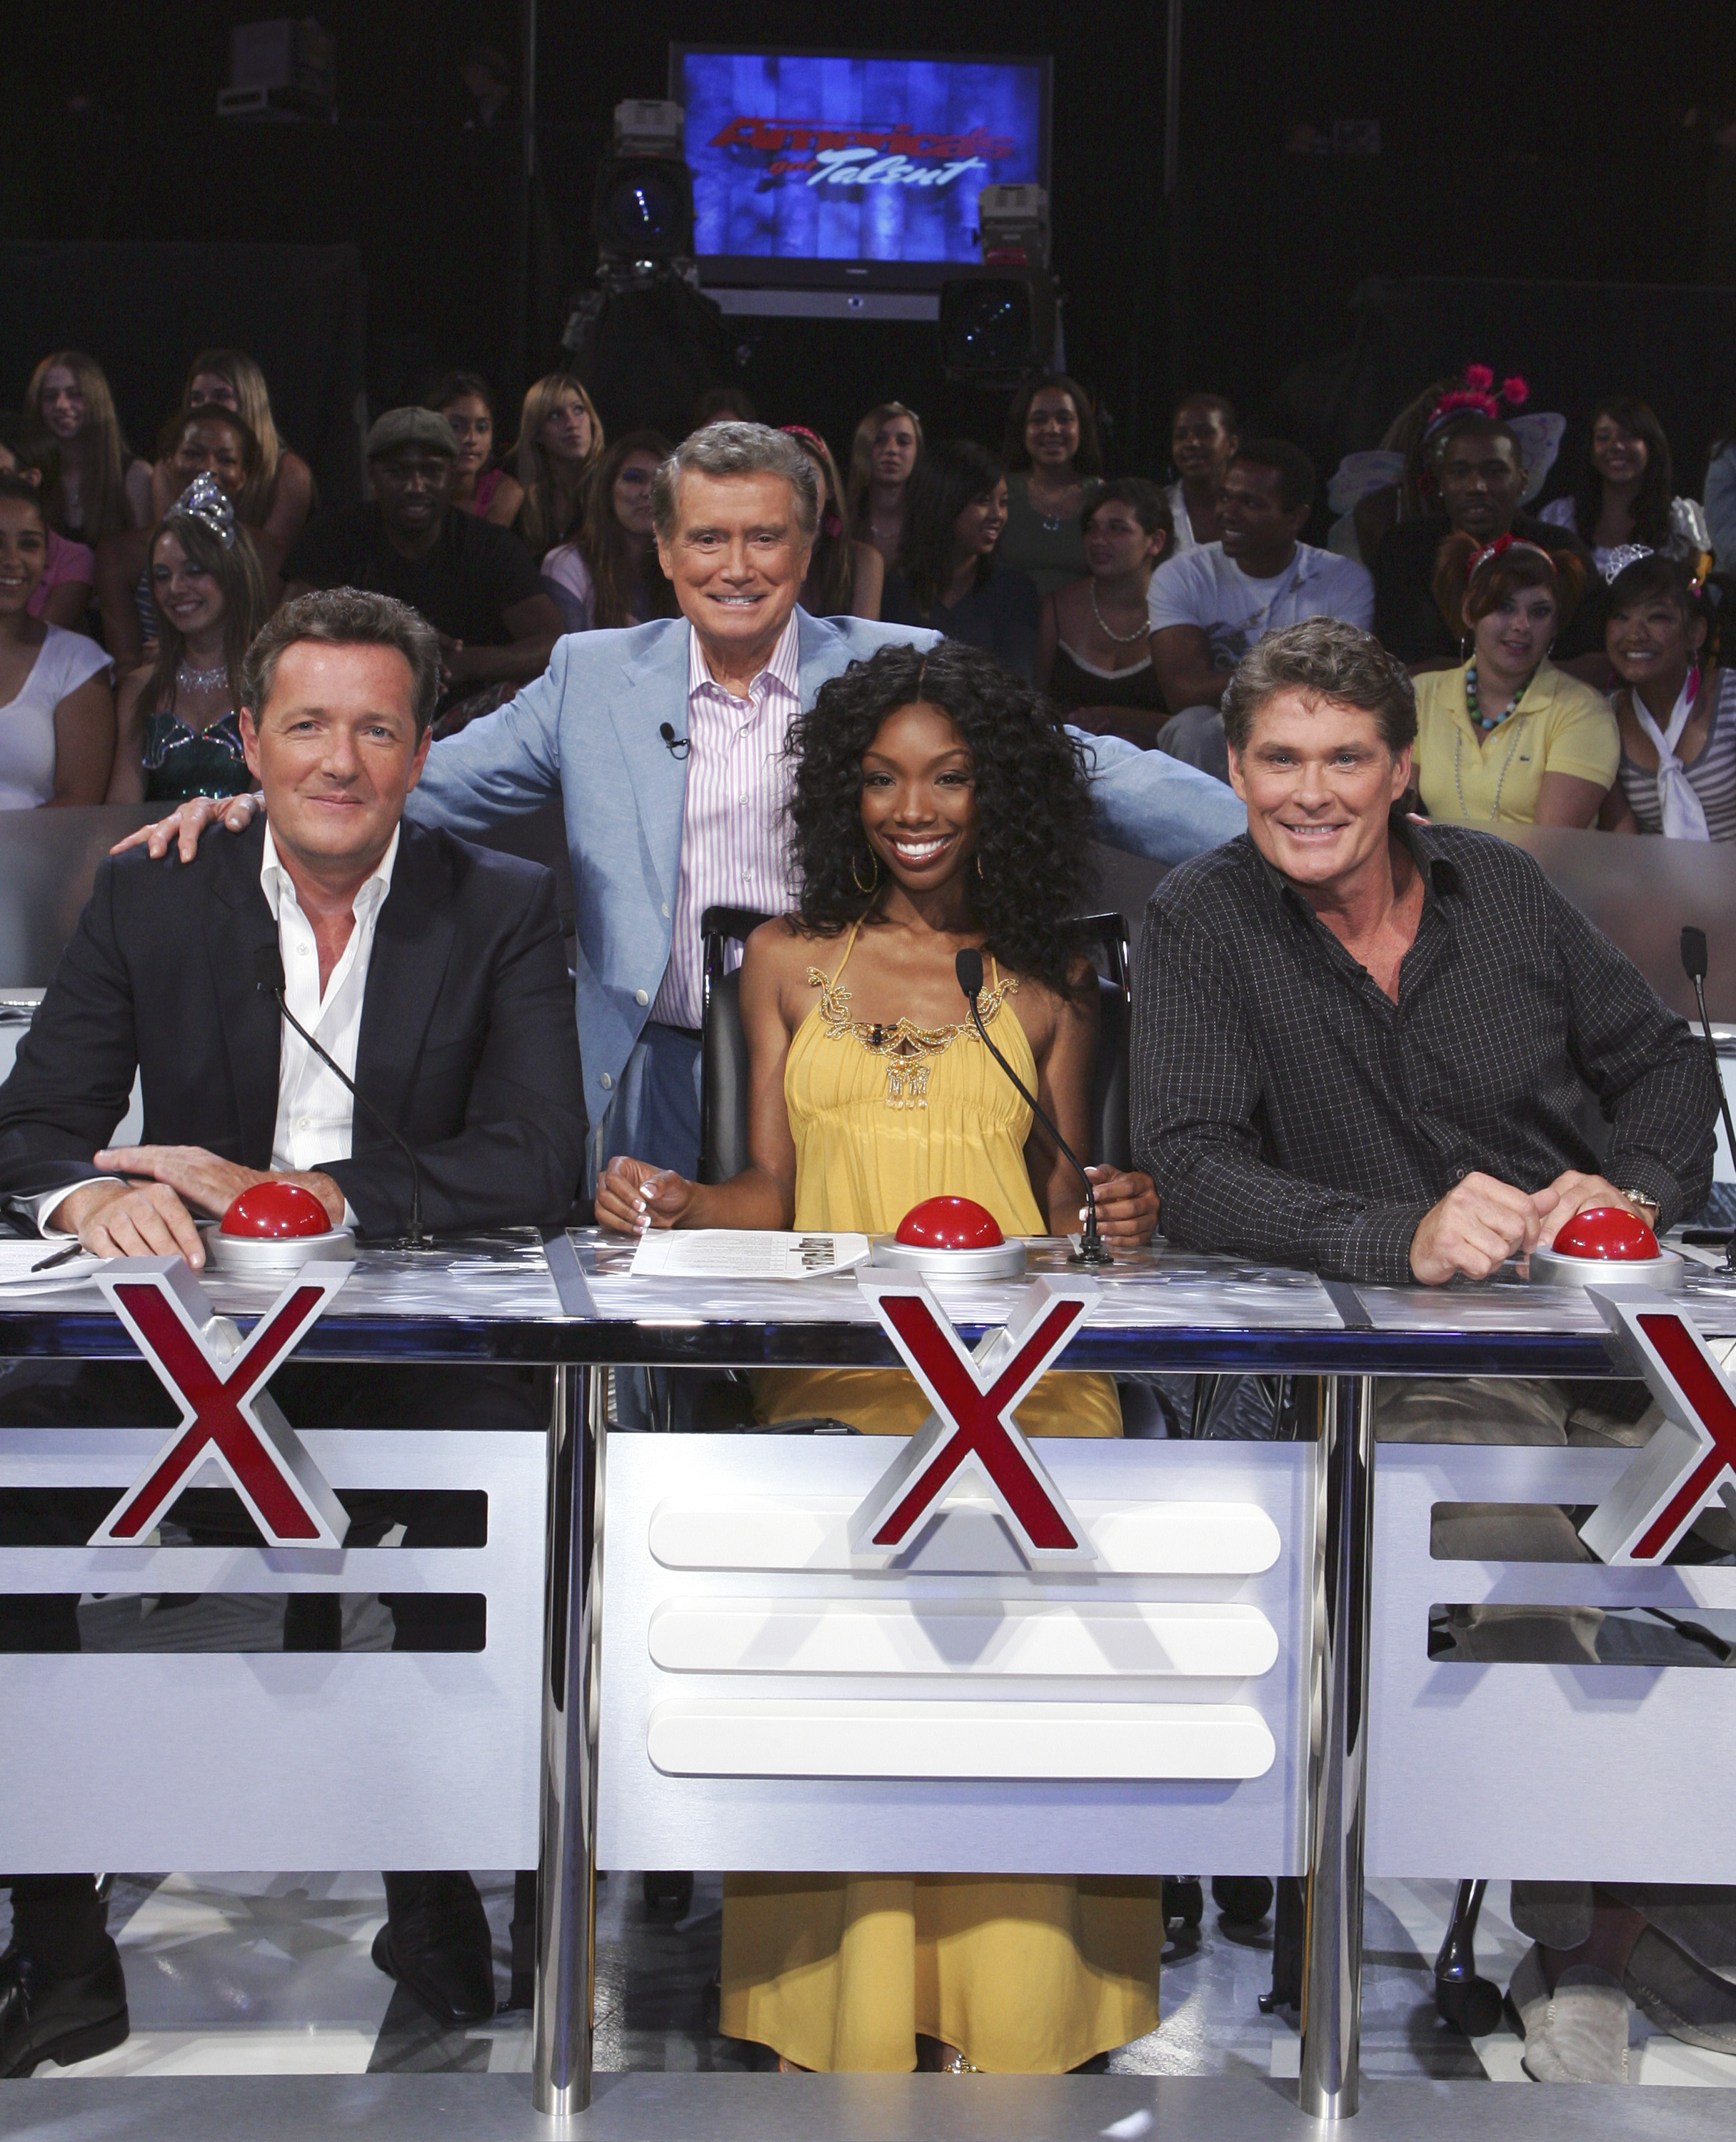 Regis Philbin hosting Season 1 of 'America's Got Talent' with Piers Morgan, Brandy Norwood, and David Hasselhoff